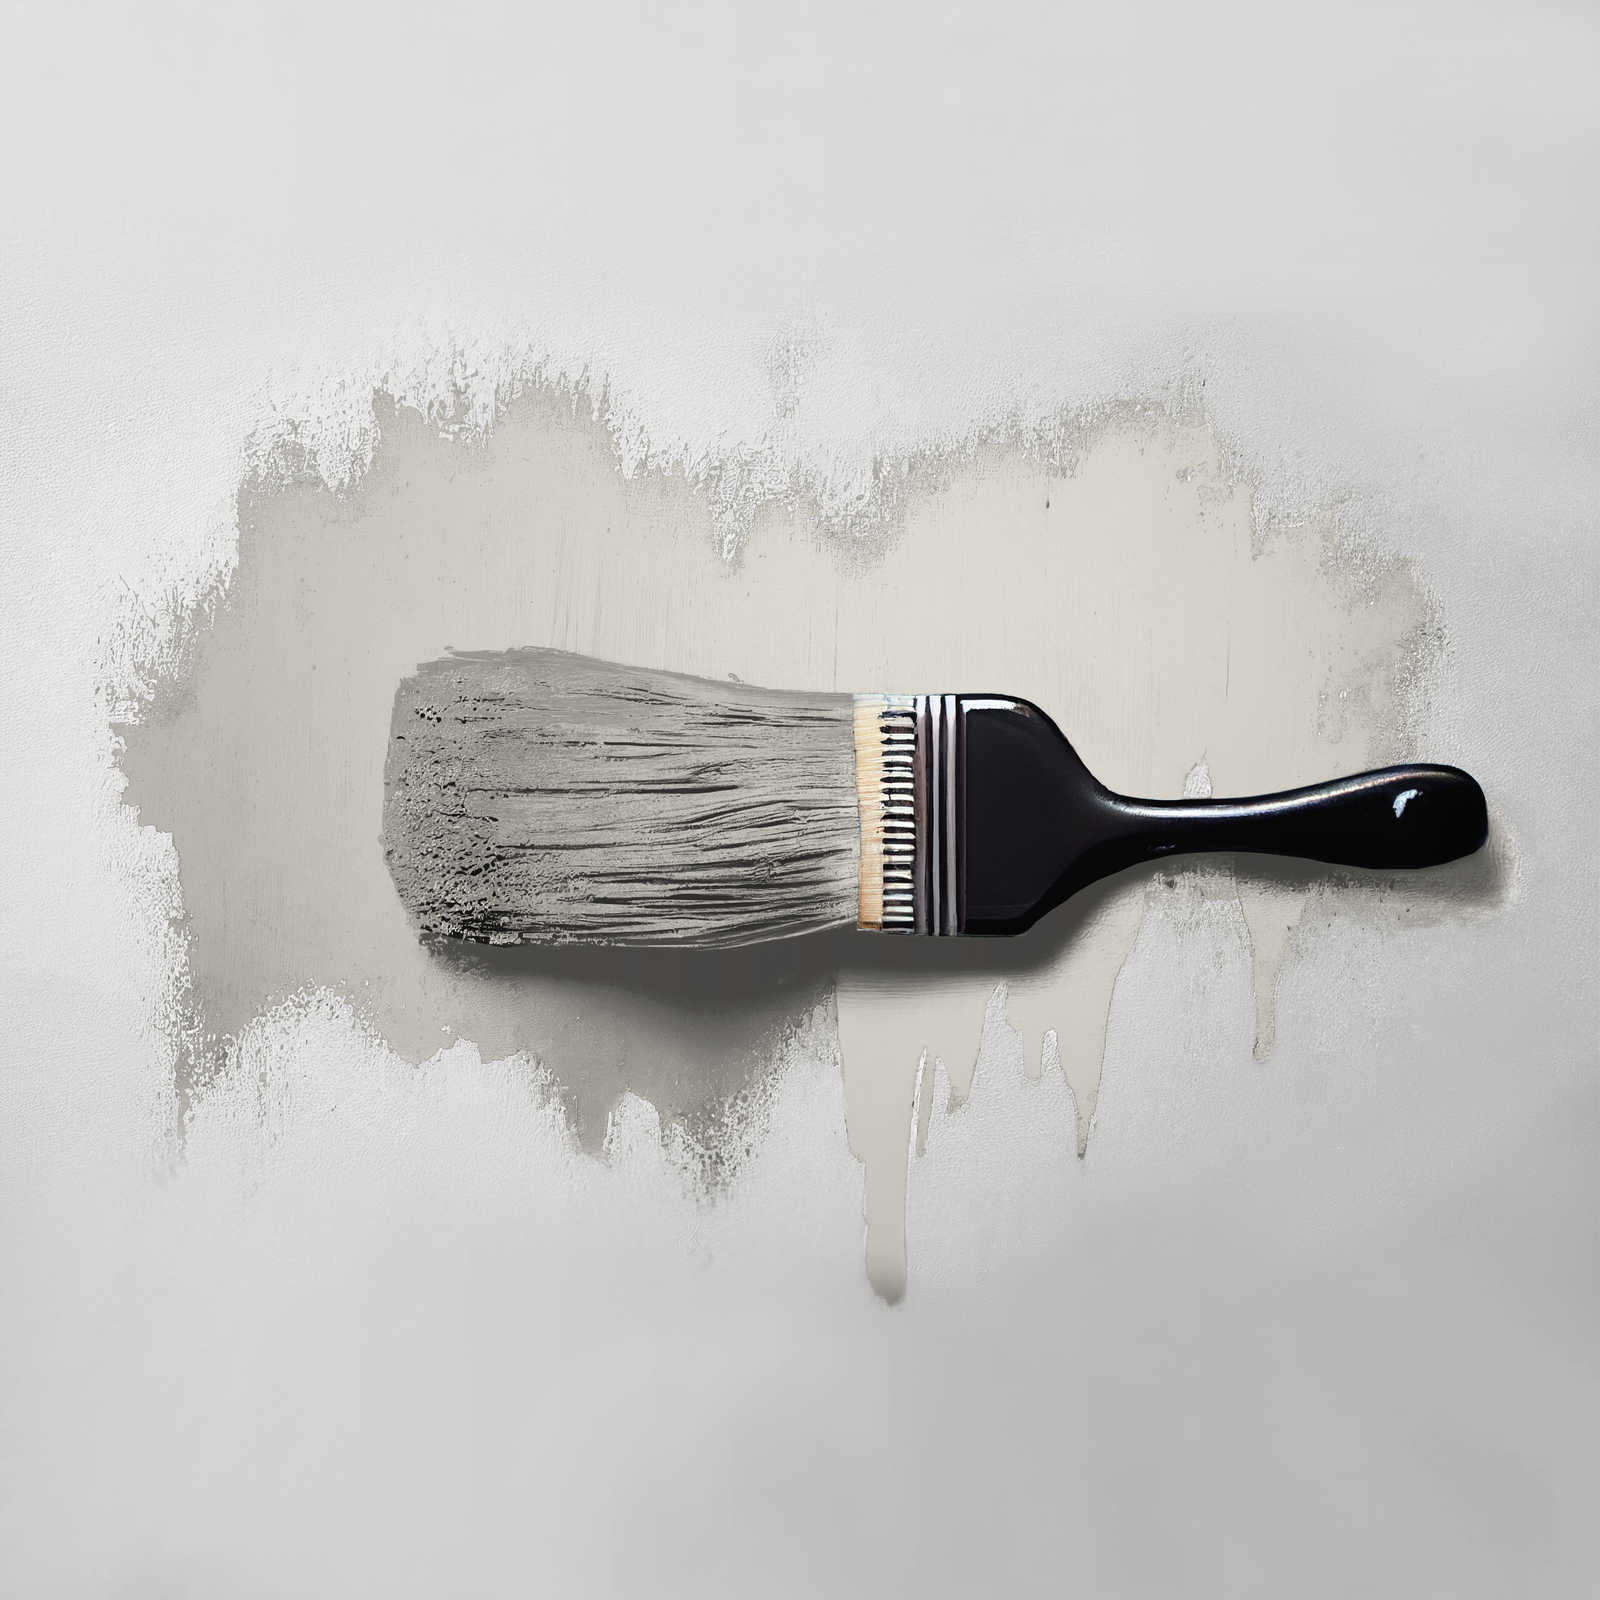             Pintura mural TCK1016 »Opened Oyster« en gris suave – 5,0 litro
        